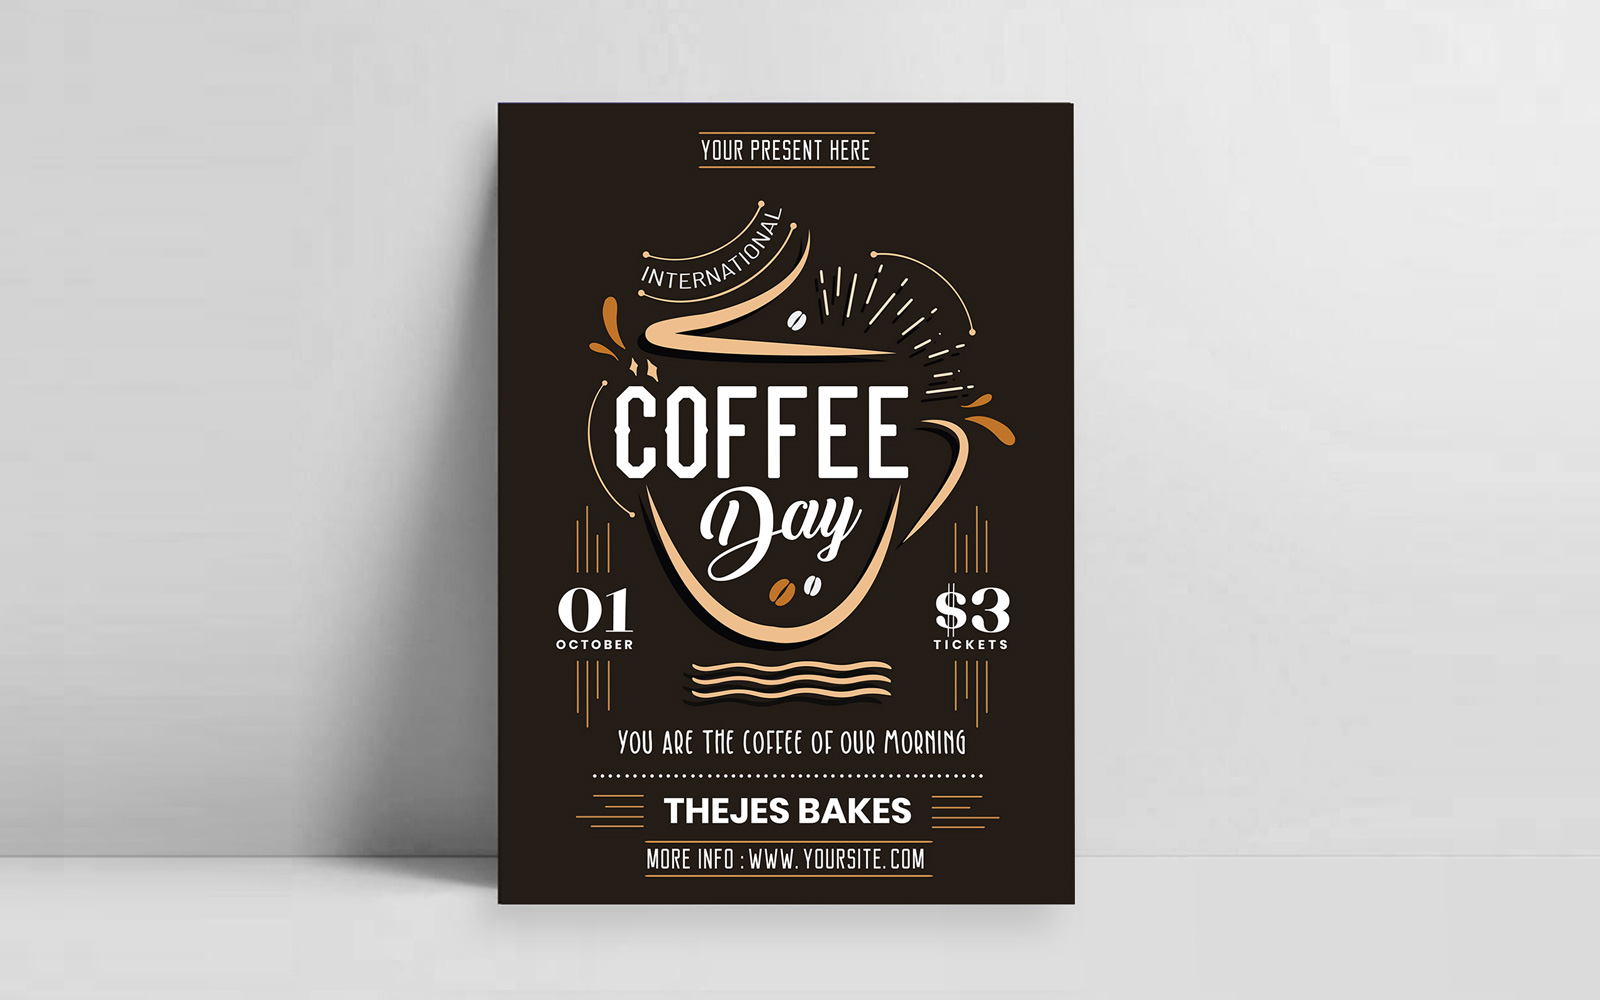 International Coffee Day Flyer Design